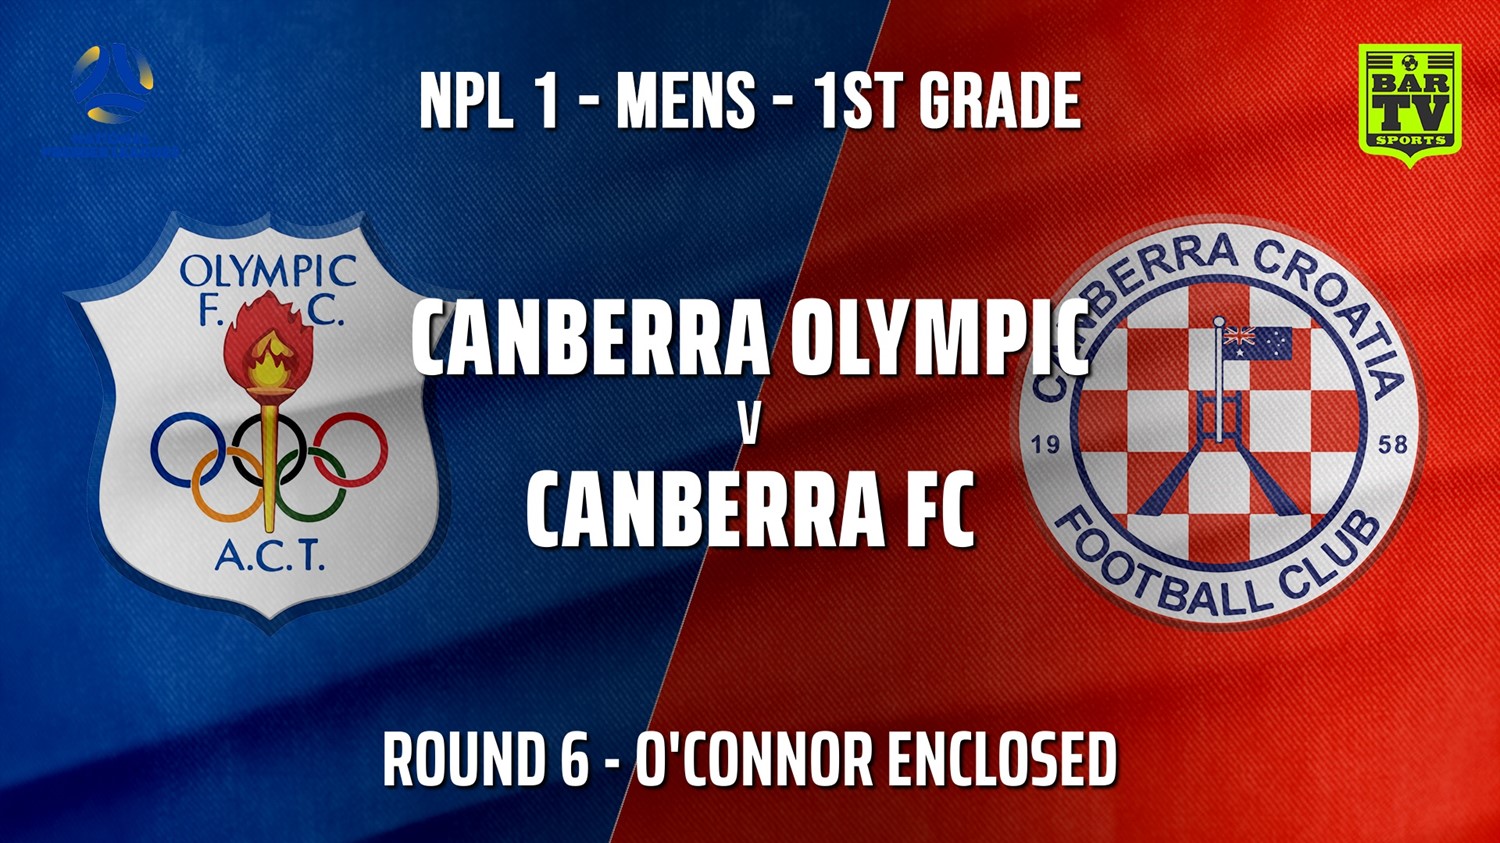 210515-NPL - CAPITAL Round 6 - Canberra Olympic FC v Canberra FC Minigame Slate Image